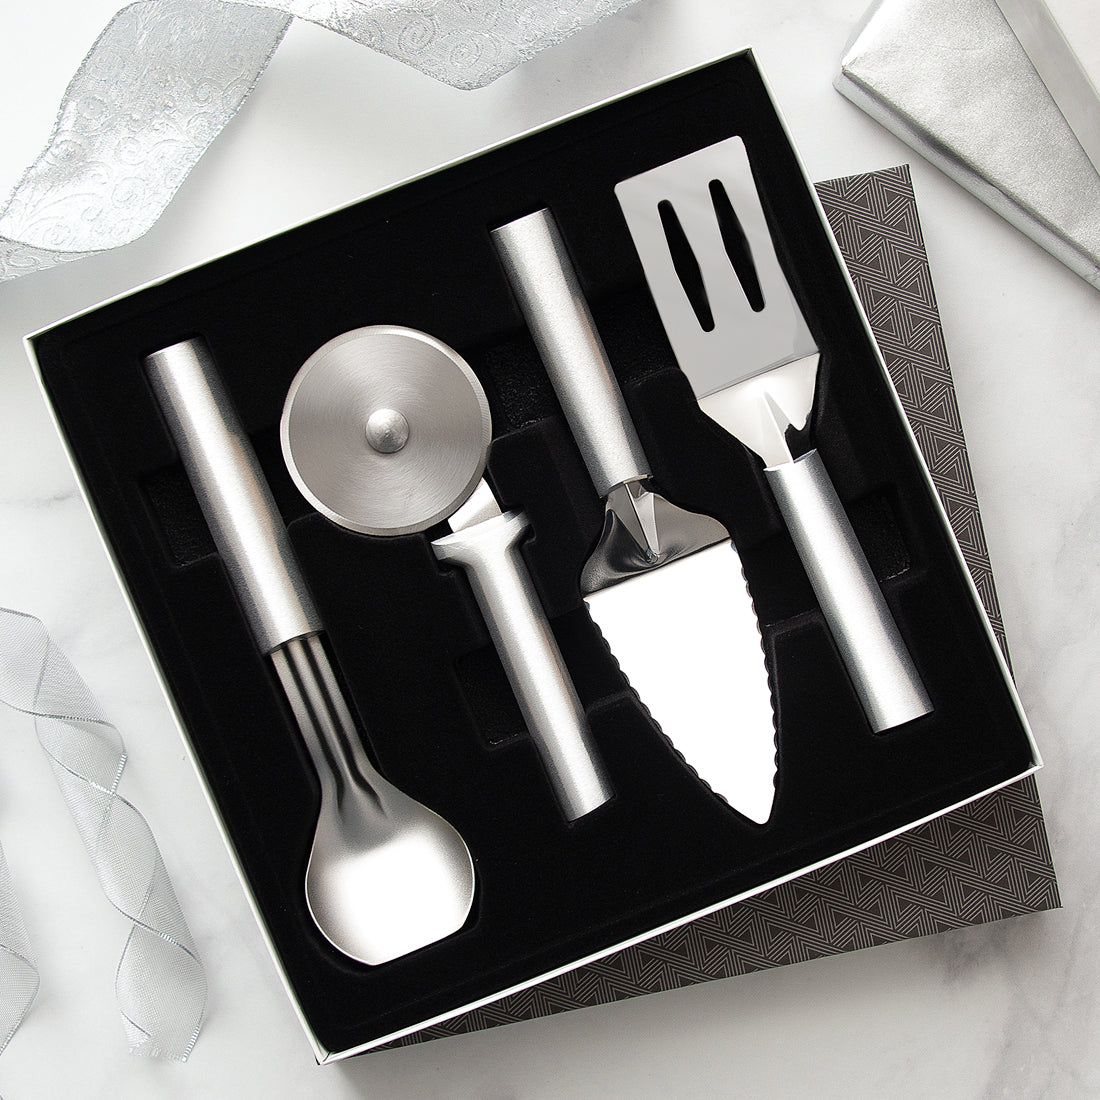 Rada Cutlery 4-Piece Kitchen Utensil Gift Set Stainless Steel Set with Aluminum